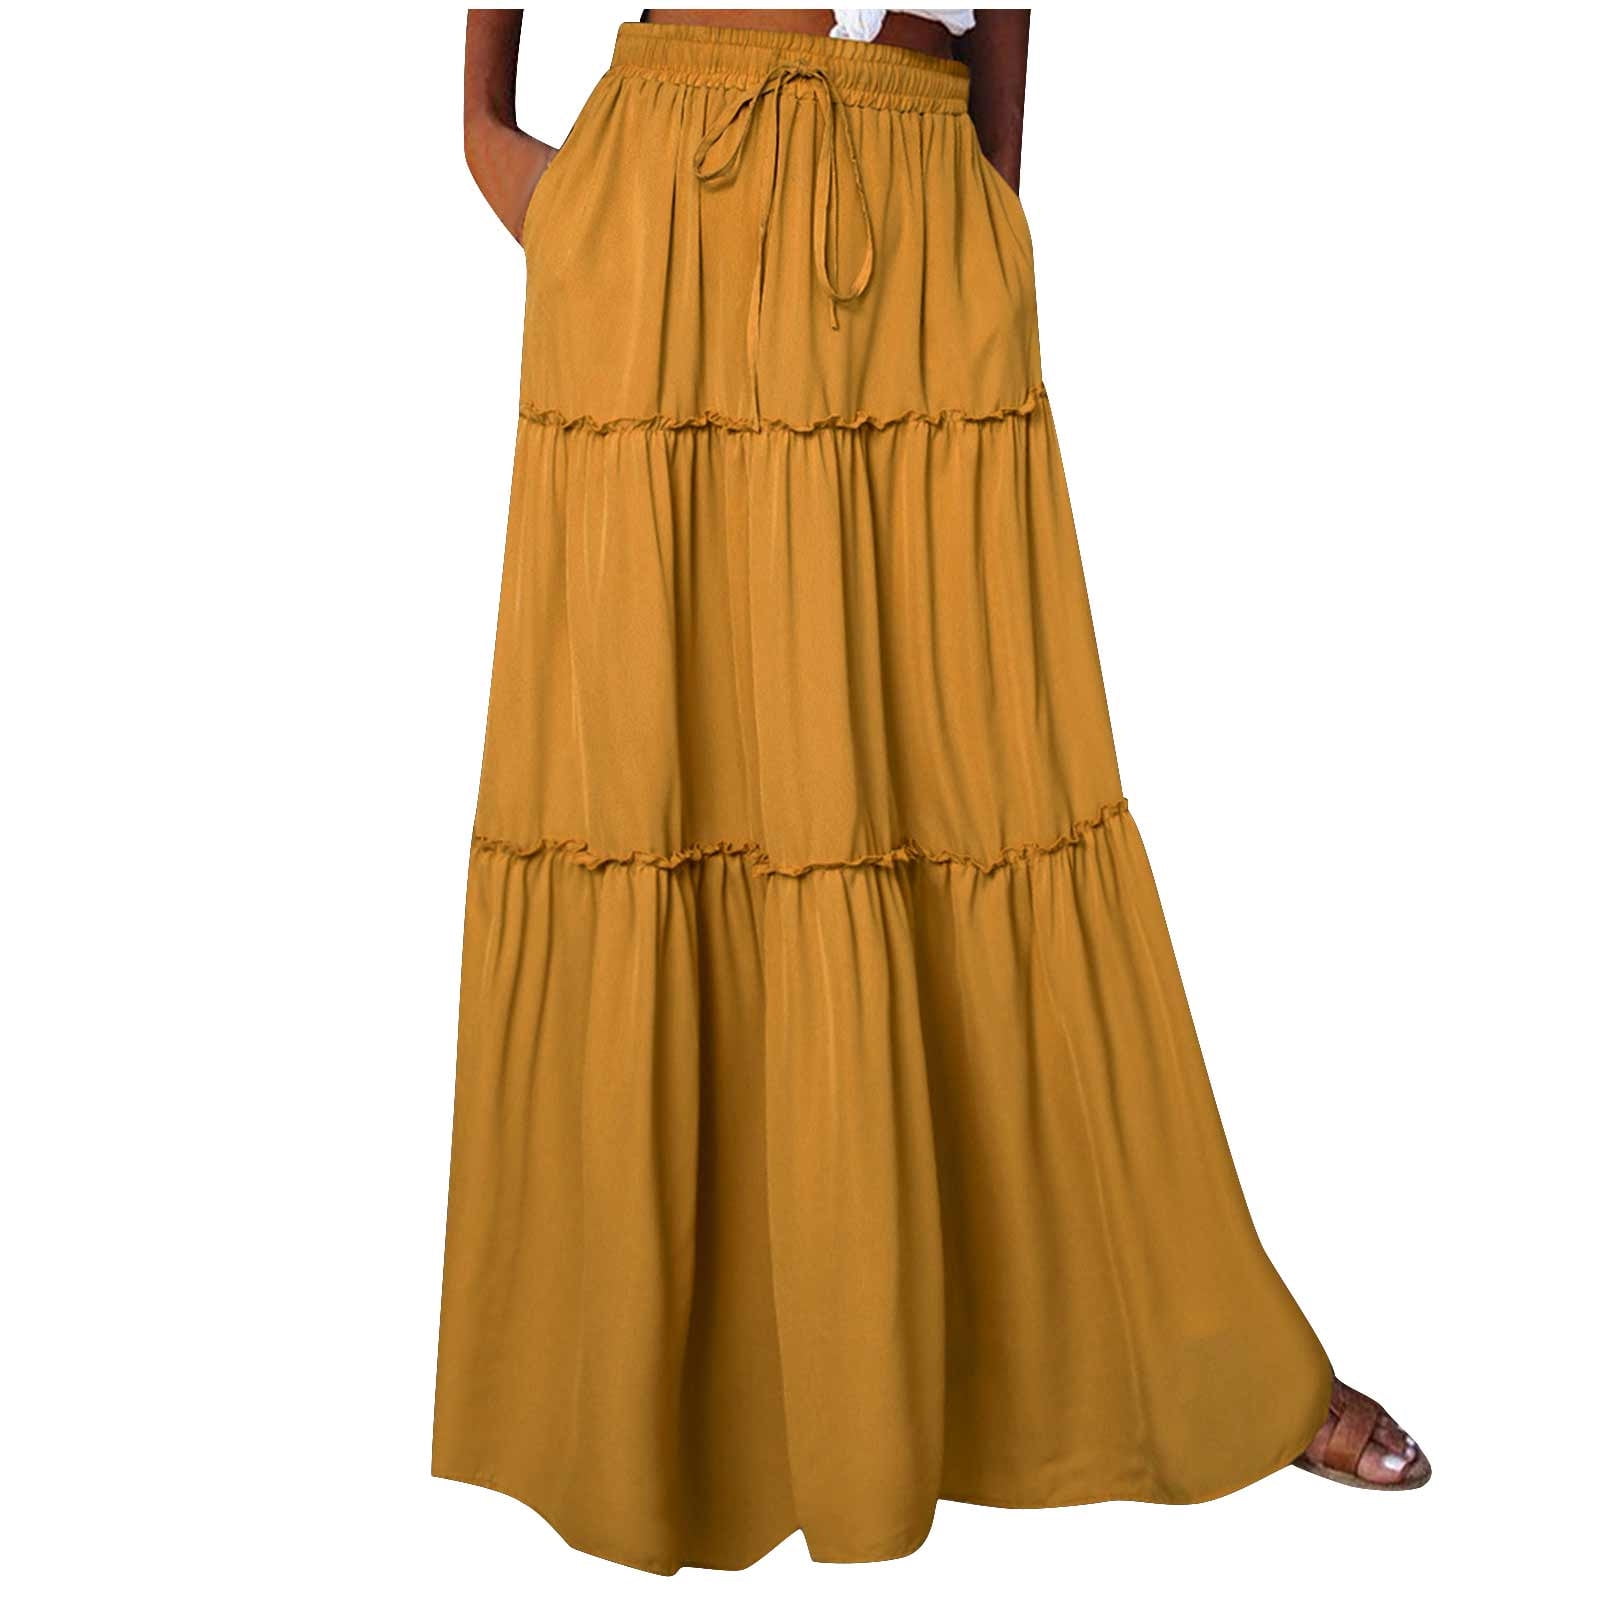 Besolor Women's Boho Maxi Skirts Elastic Waist Pleated A-Line Skirt ...